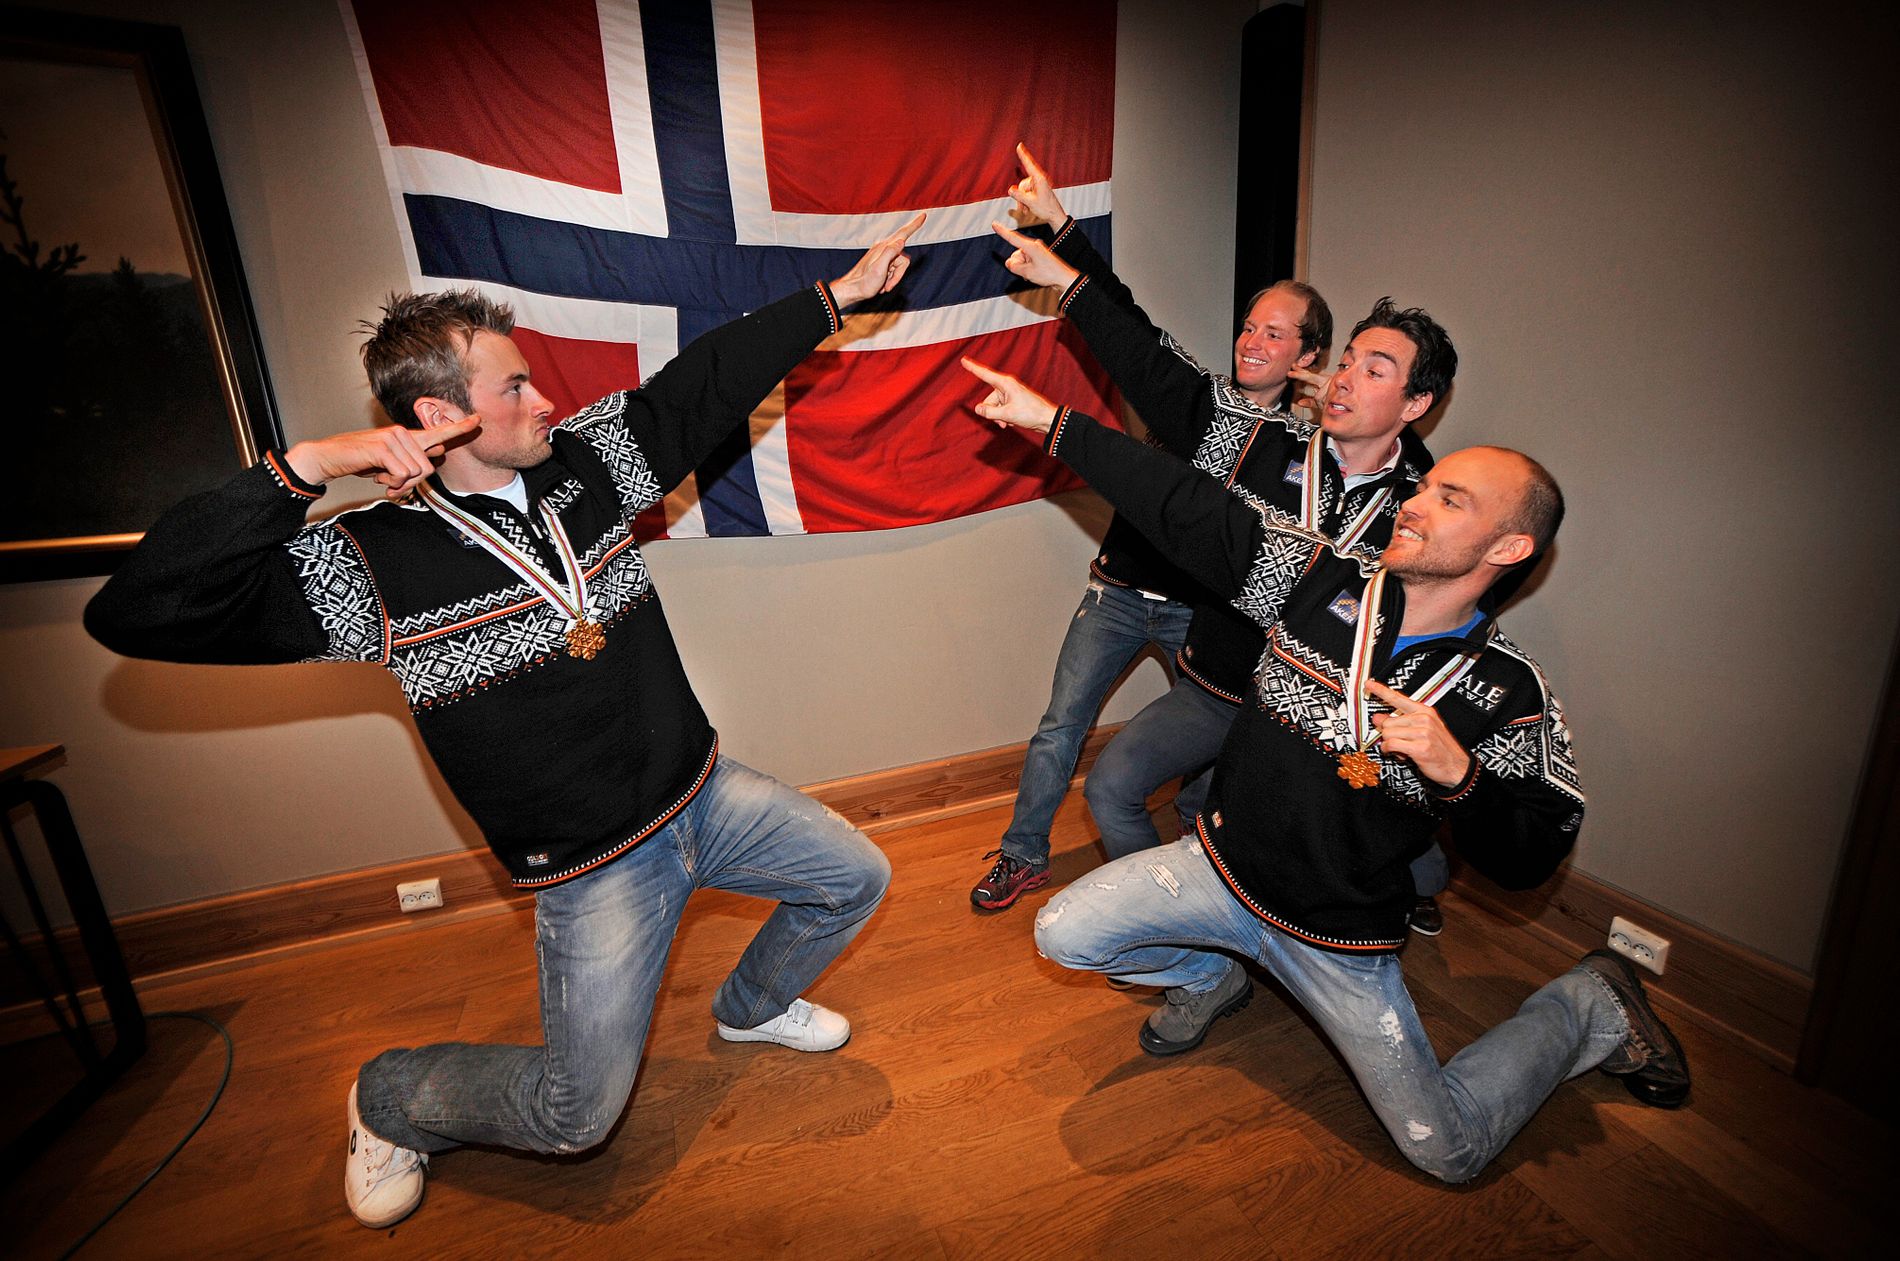 ЧМ-2011. Нортуг взял золото в составе эстафетной четверки Норвегии